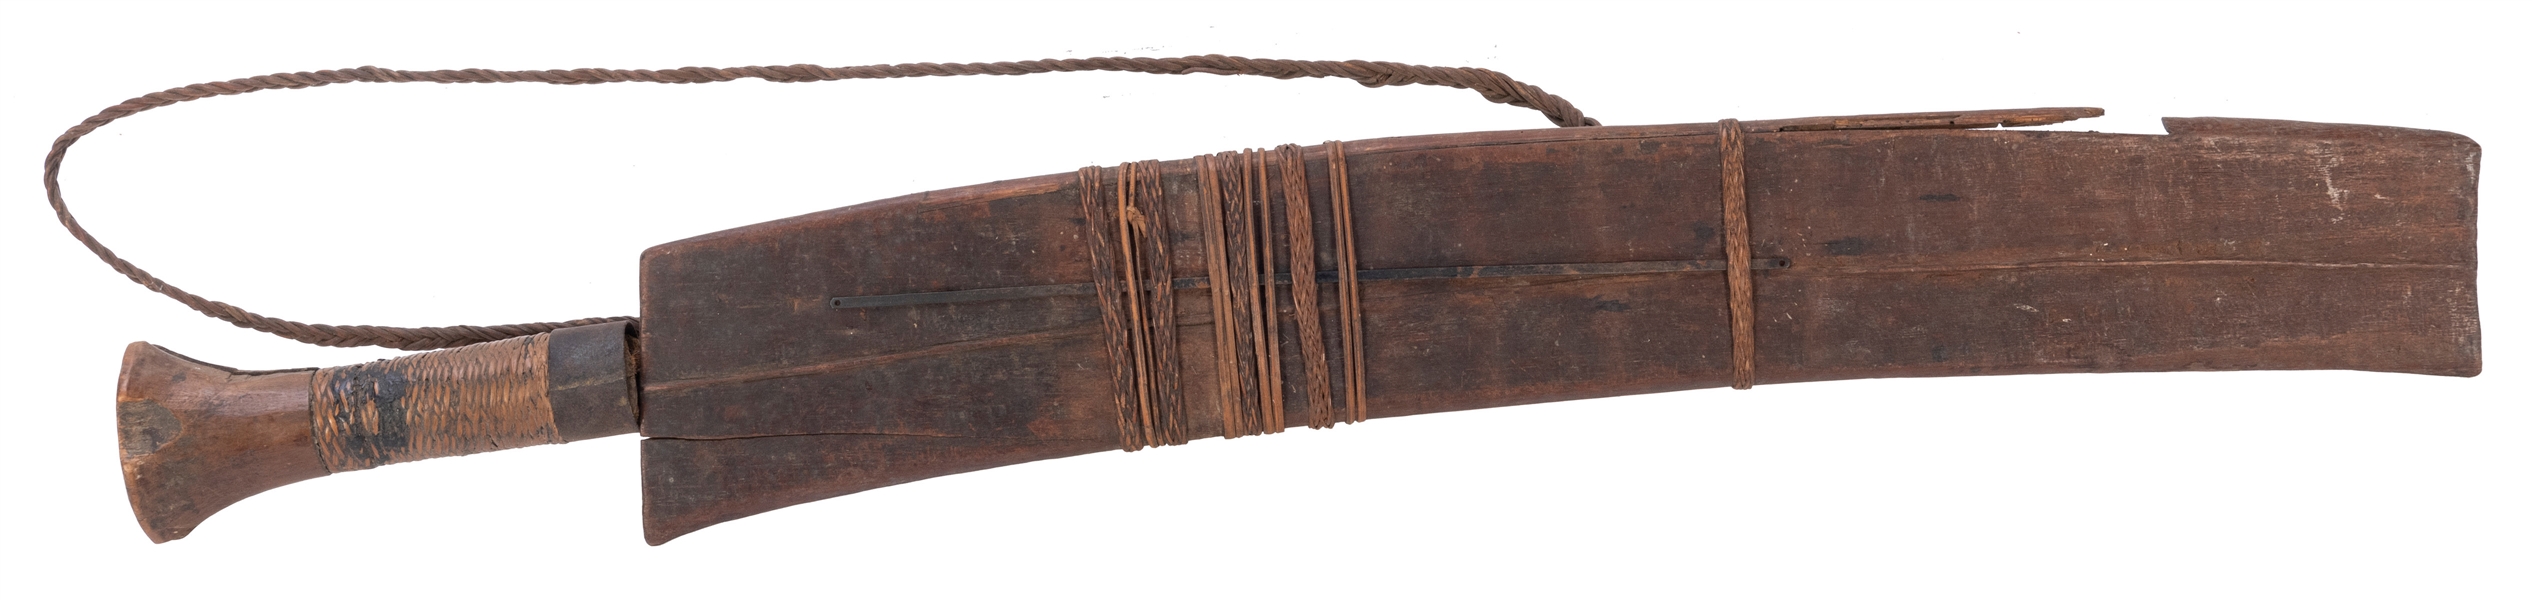  Naga Dao Sword with Scabbard. Assam, 19th century. Wooden h...